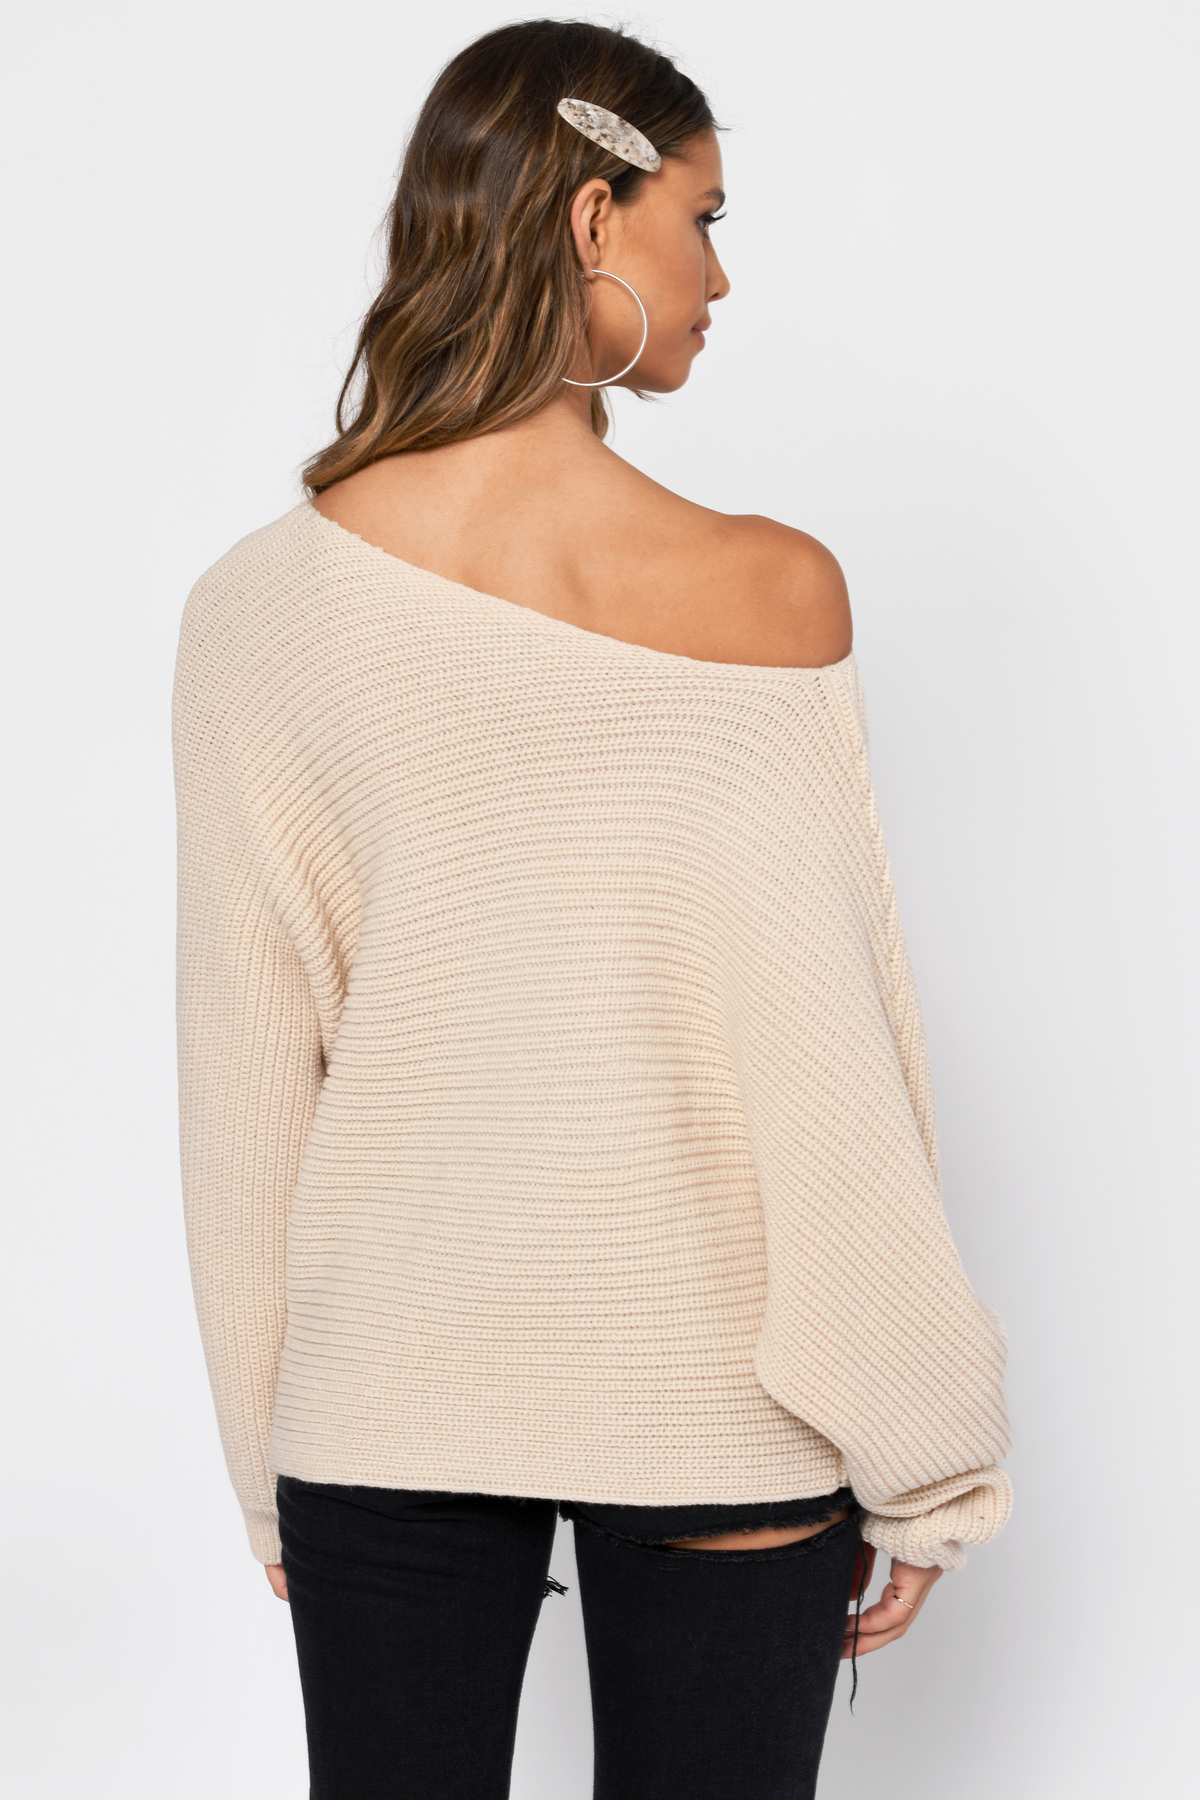 Time Will Tell Asymmetrical Sweater in Cream - $92 | Tobi US